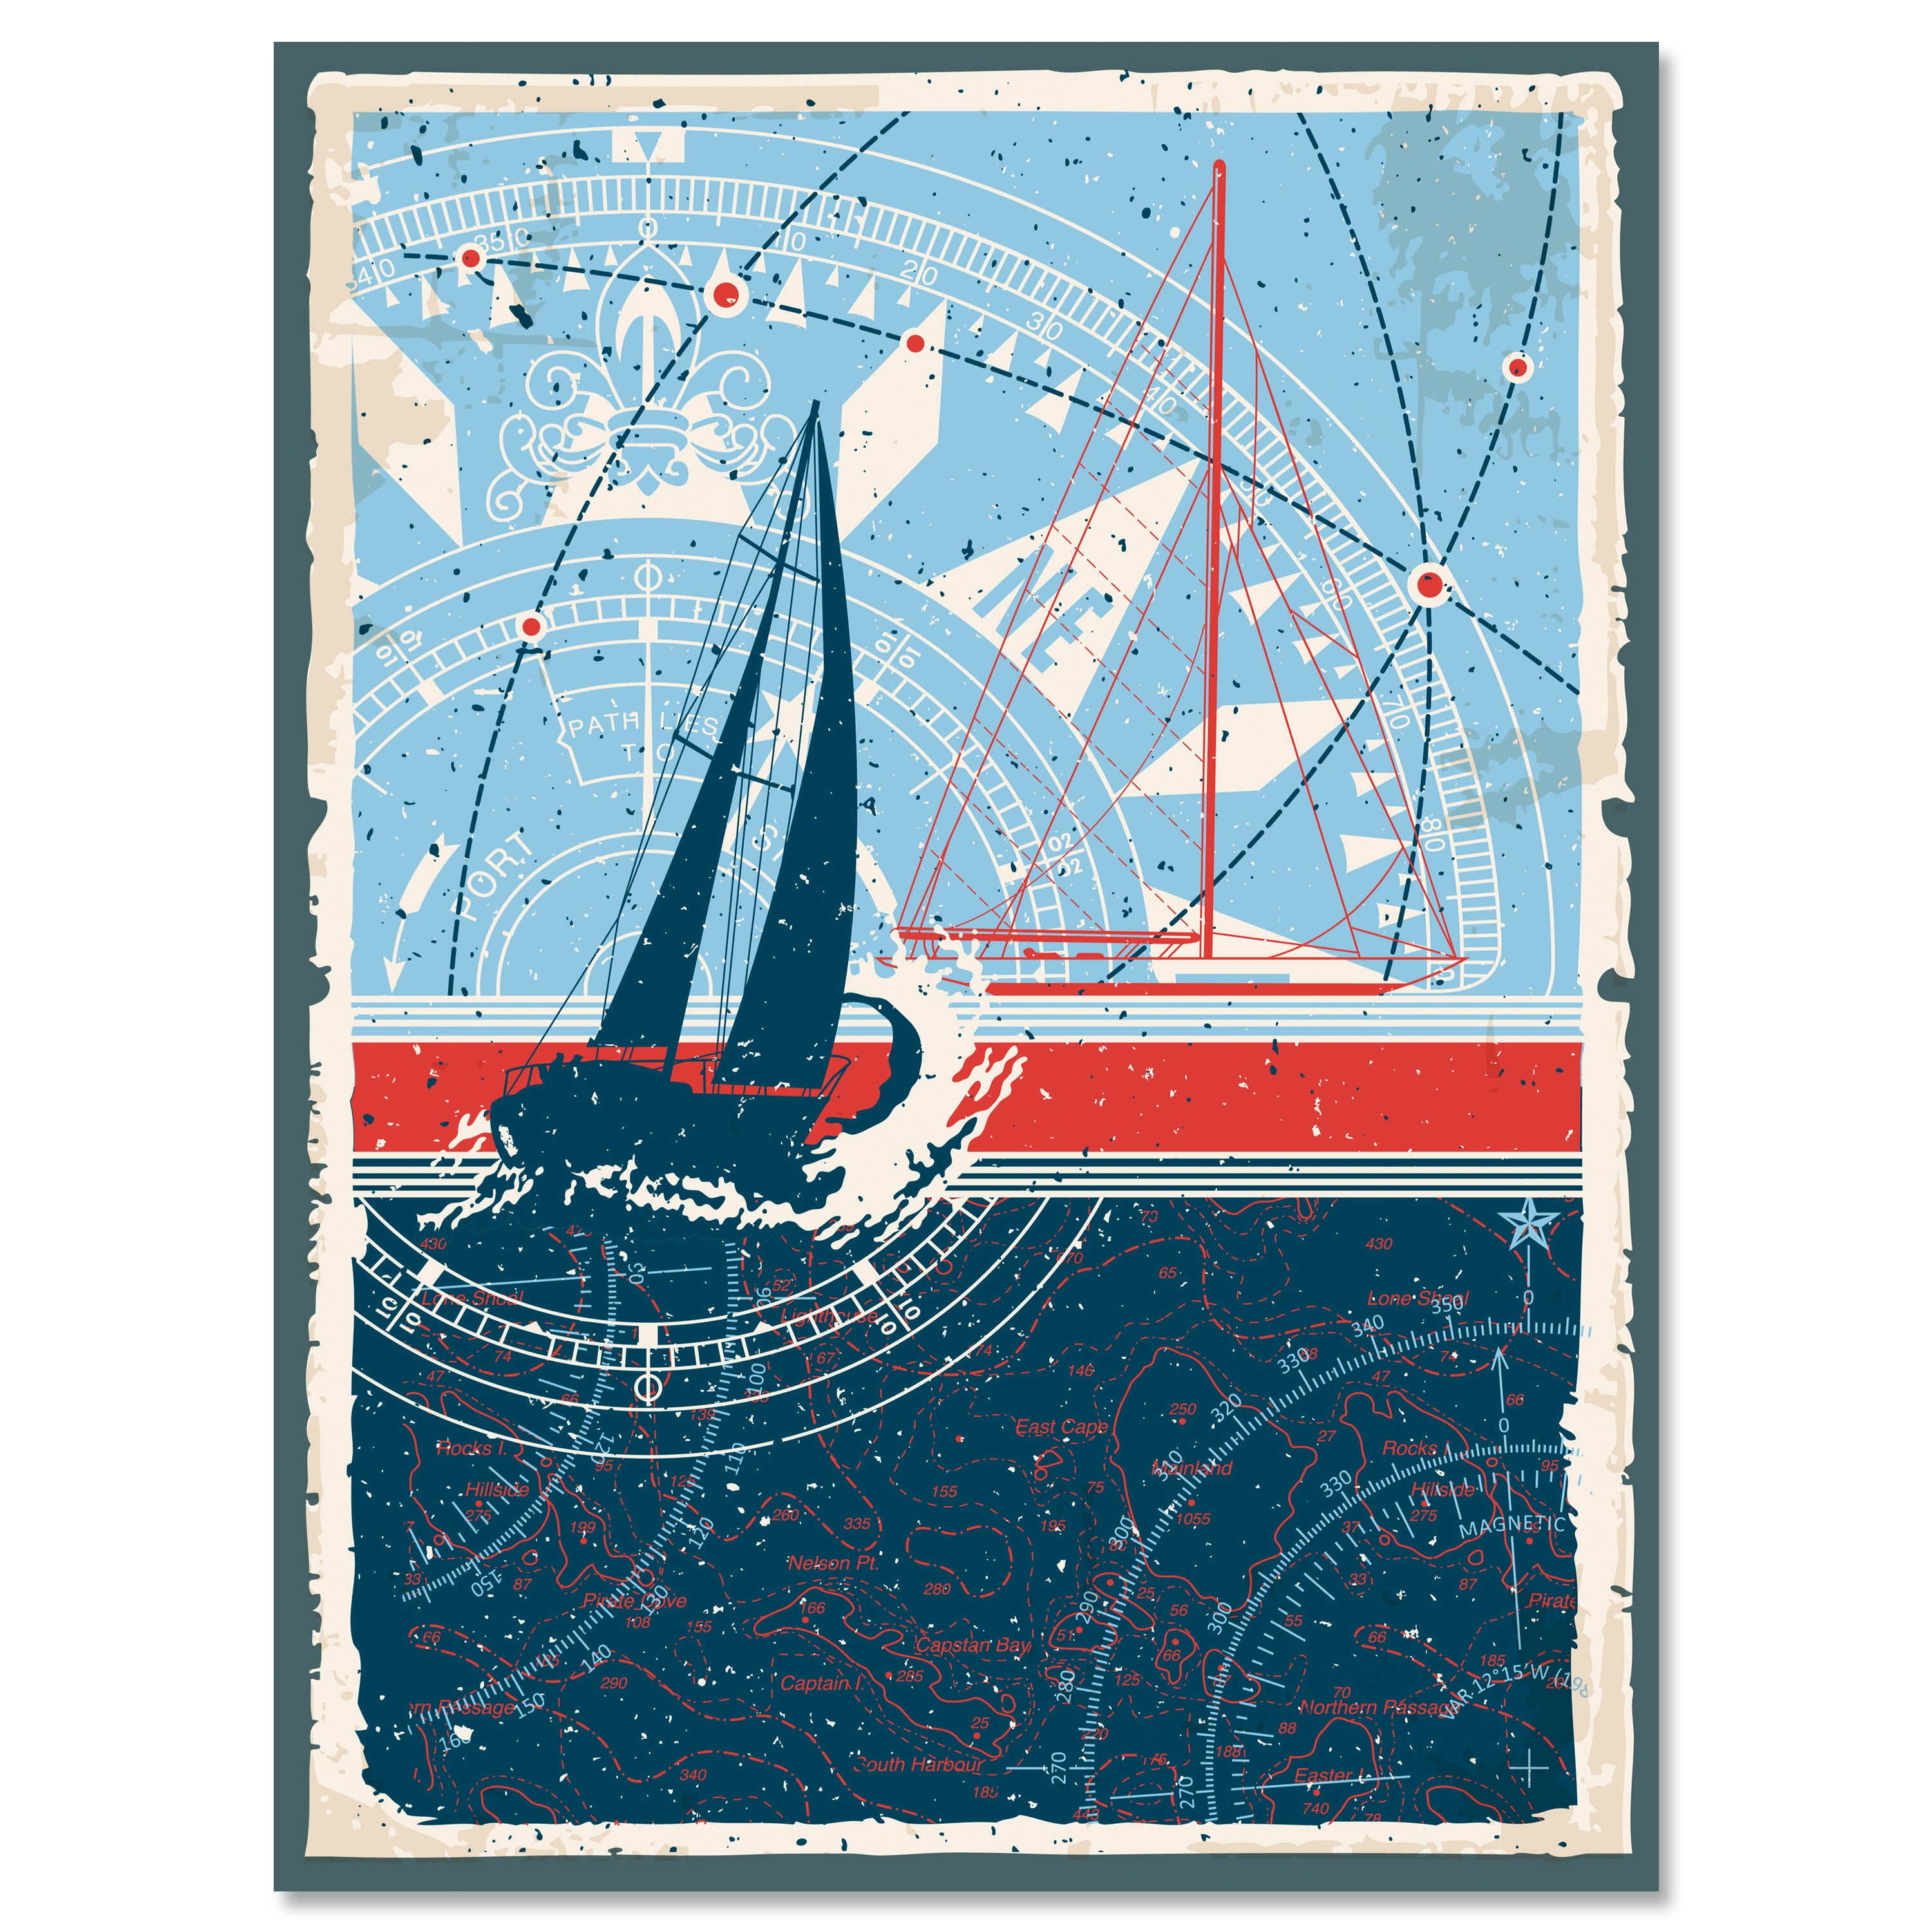 Leinwandbild Maritim, Segelschiff, Hochformat M0684 kaufen - Bild 1